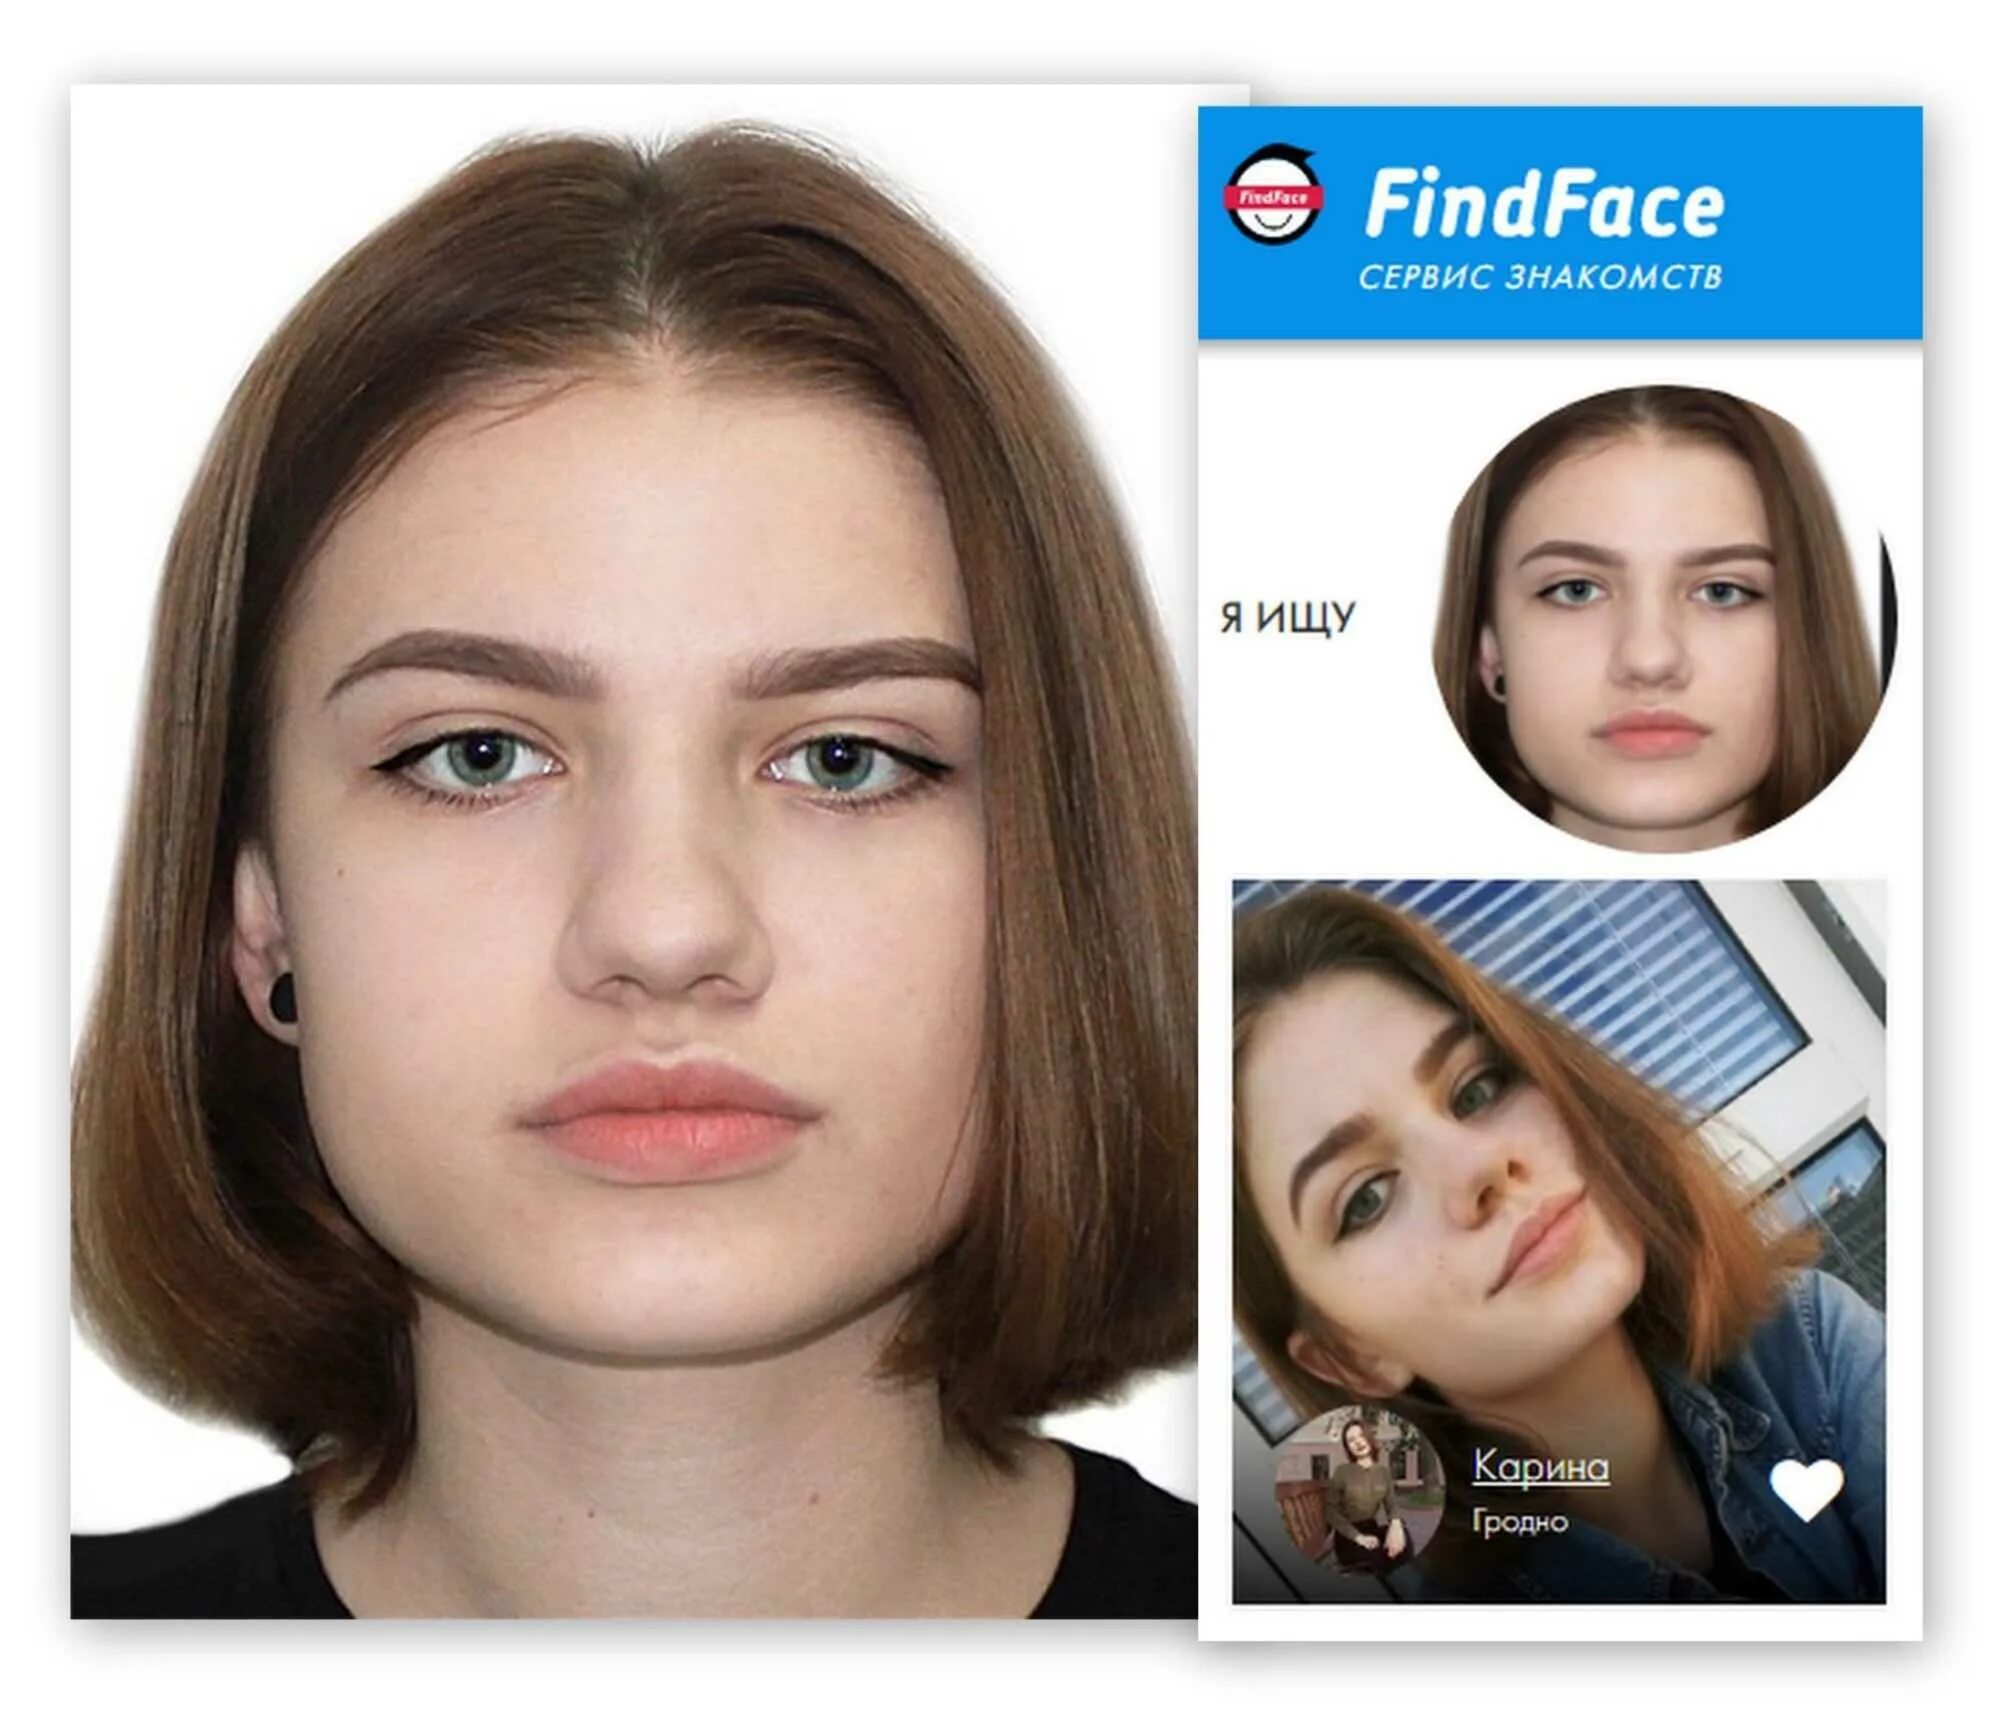 FINDFACE. FINDFACE фото. Поиск фото лица. Узнать лицо по фото.